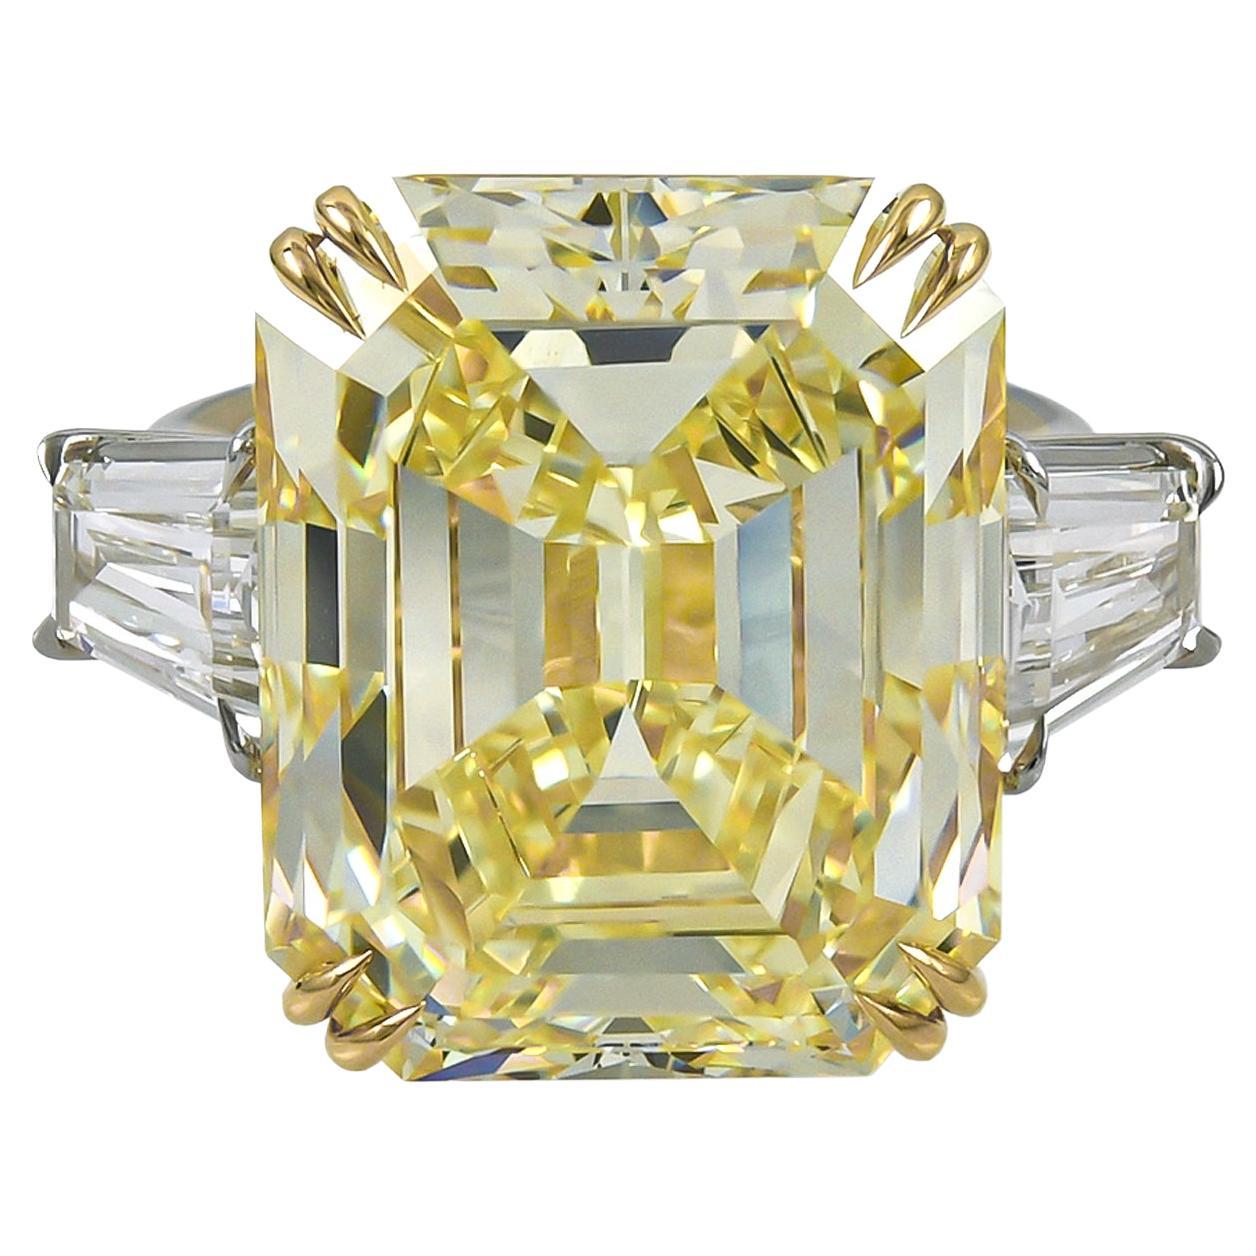 Spectra Fine Jewelry GIA zertifiziert 23,16 Karat Ausgefallener gelber Fancy-Diamantring